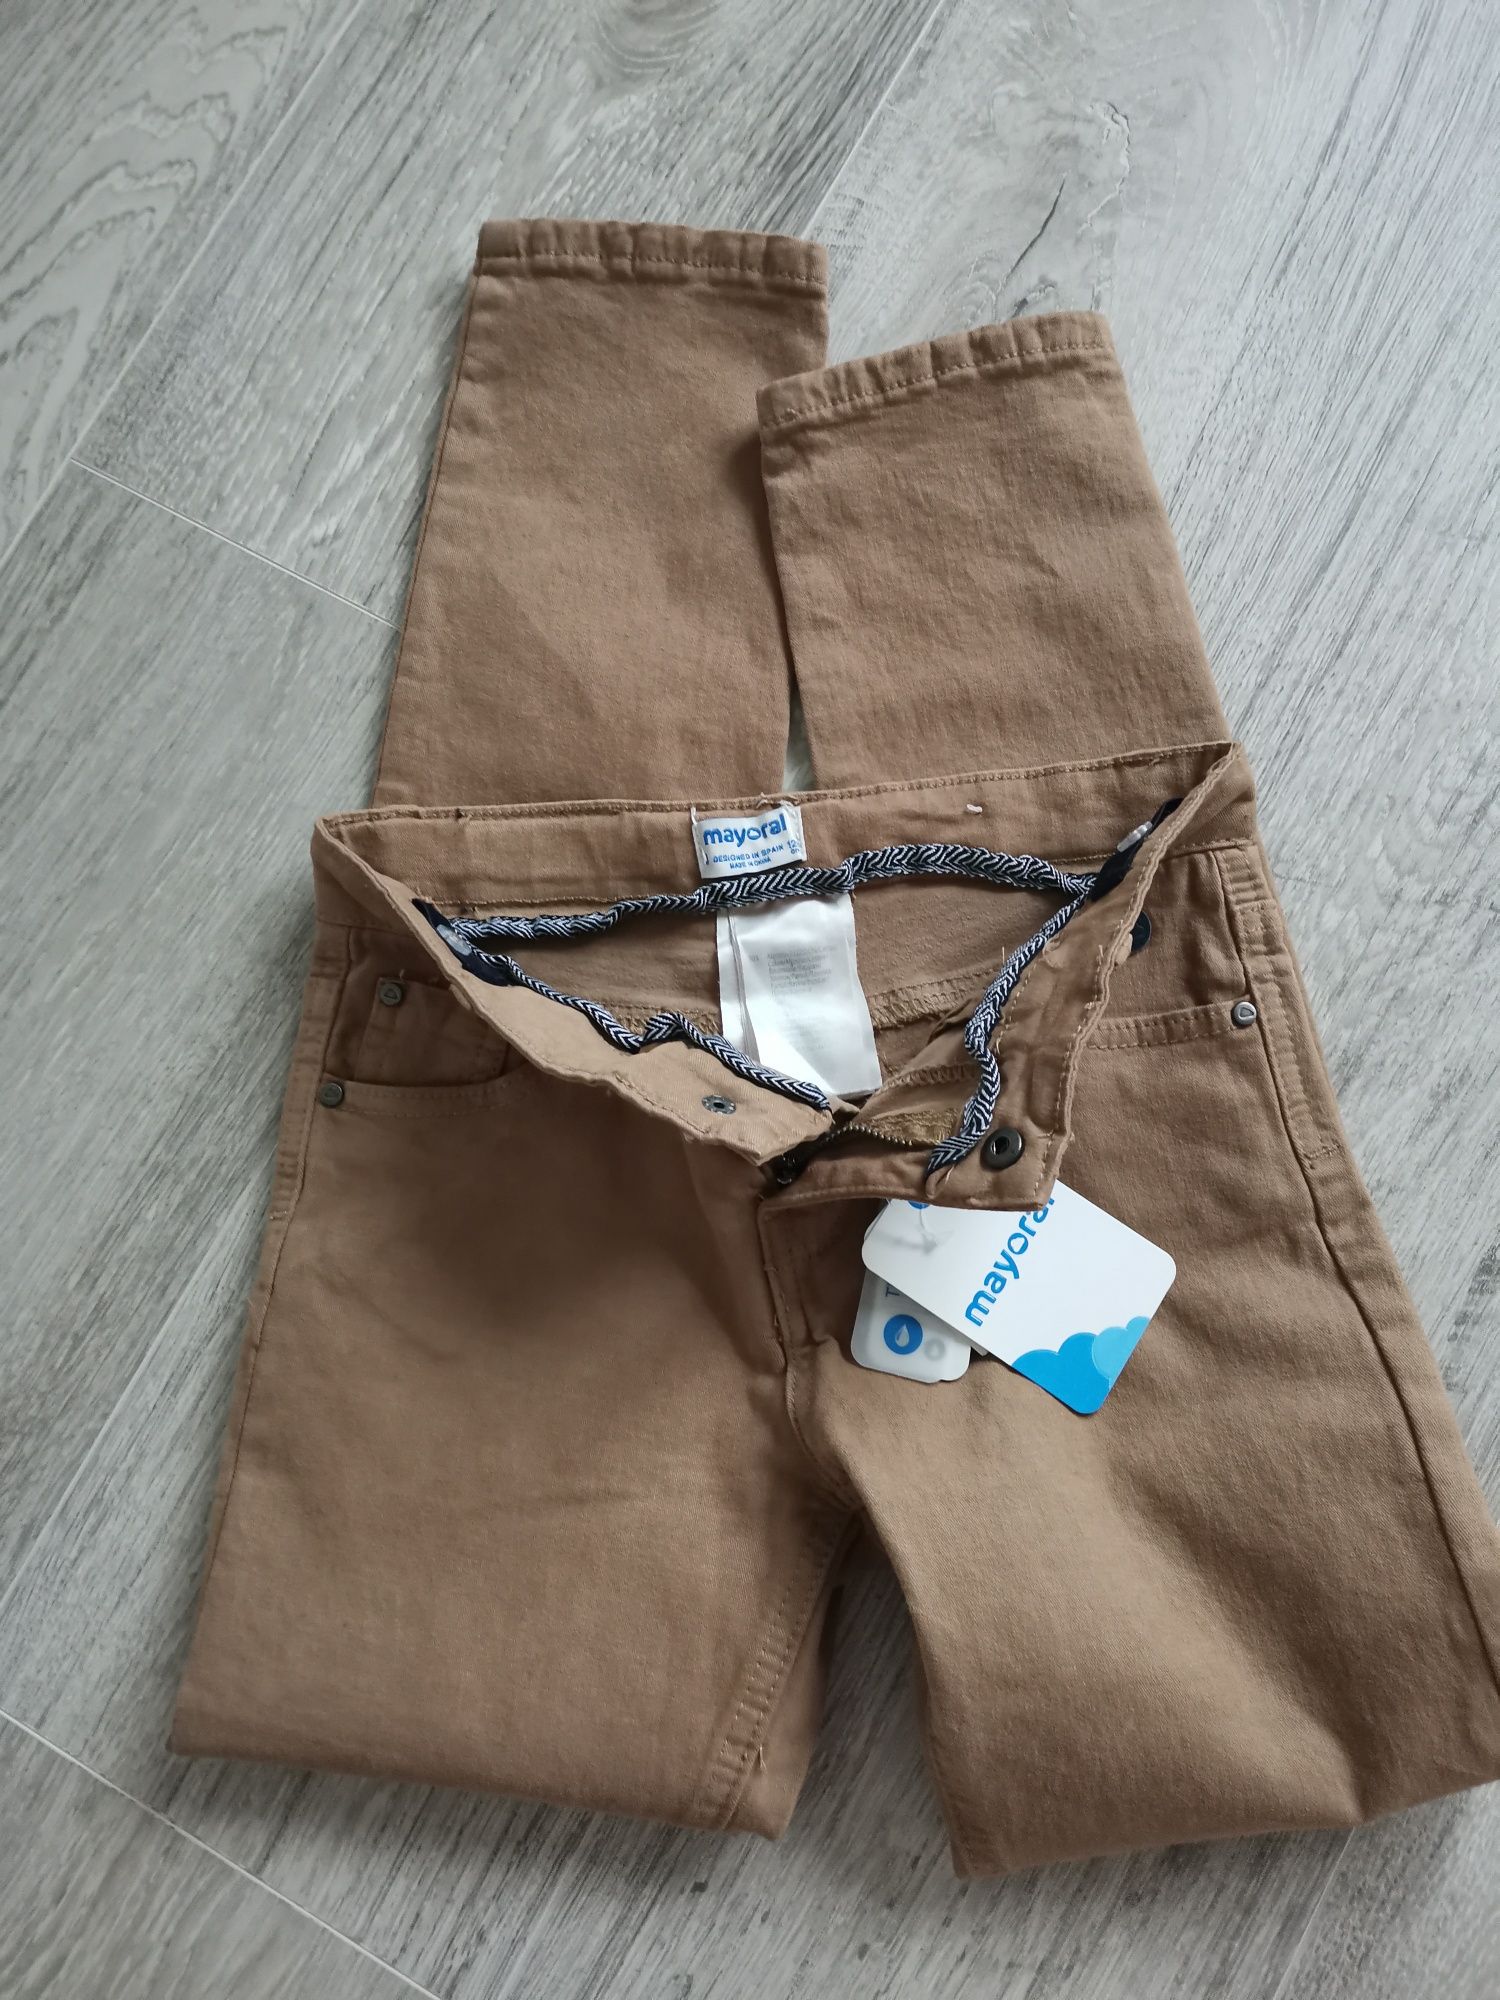 Pantaloni Mayoral 128 cm